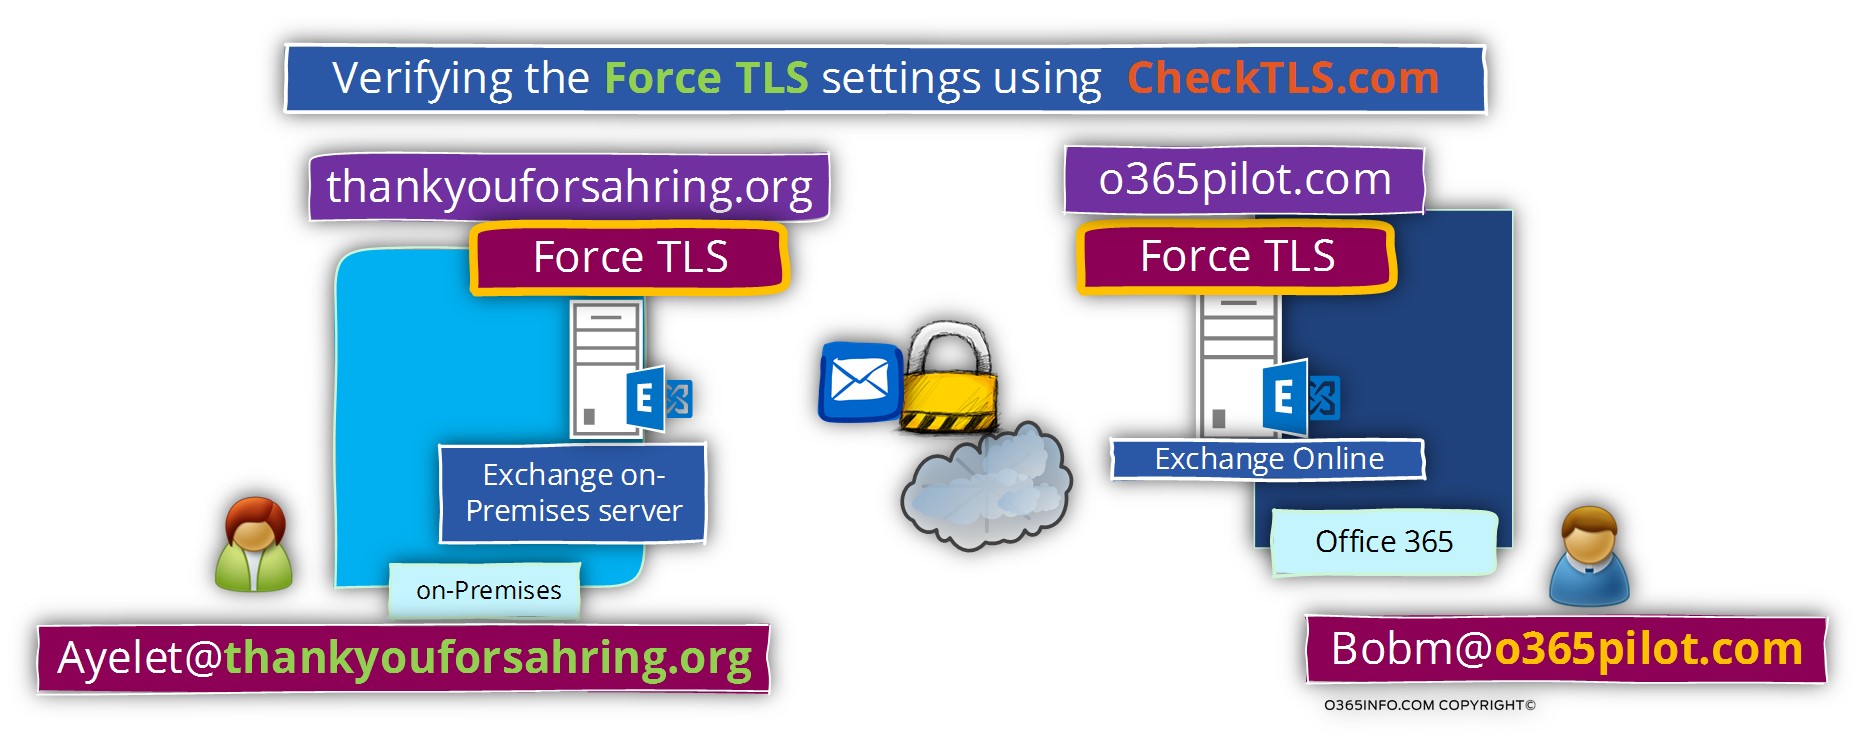 Verifying the Force TLS settings using CheckTLS.com